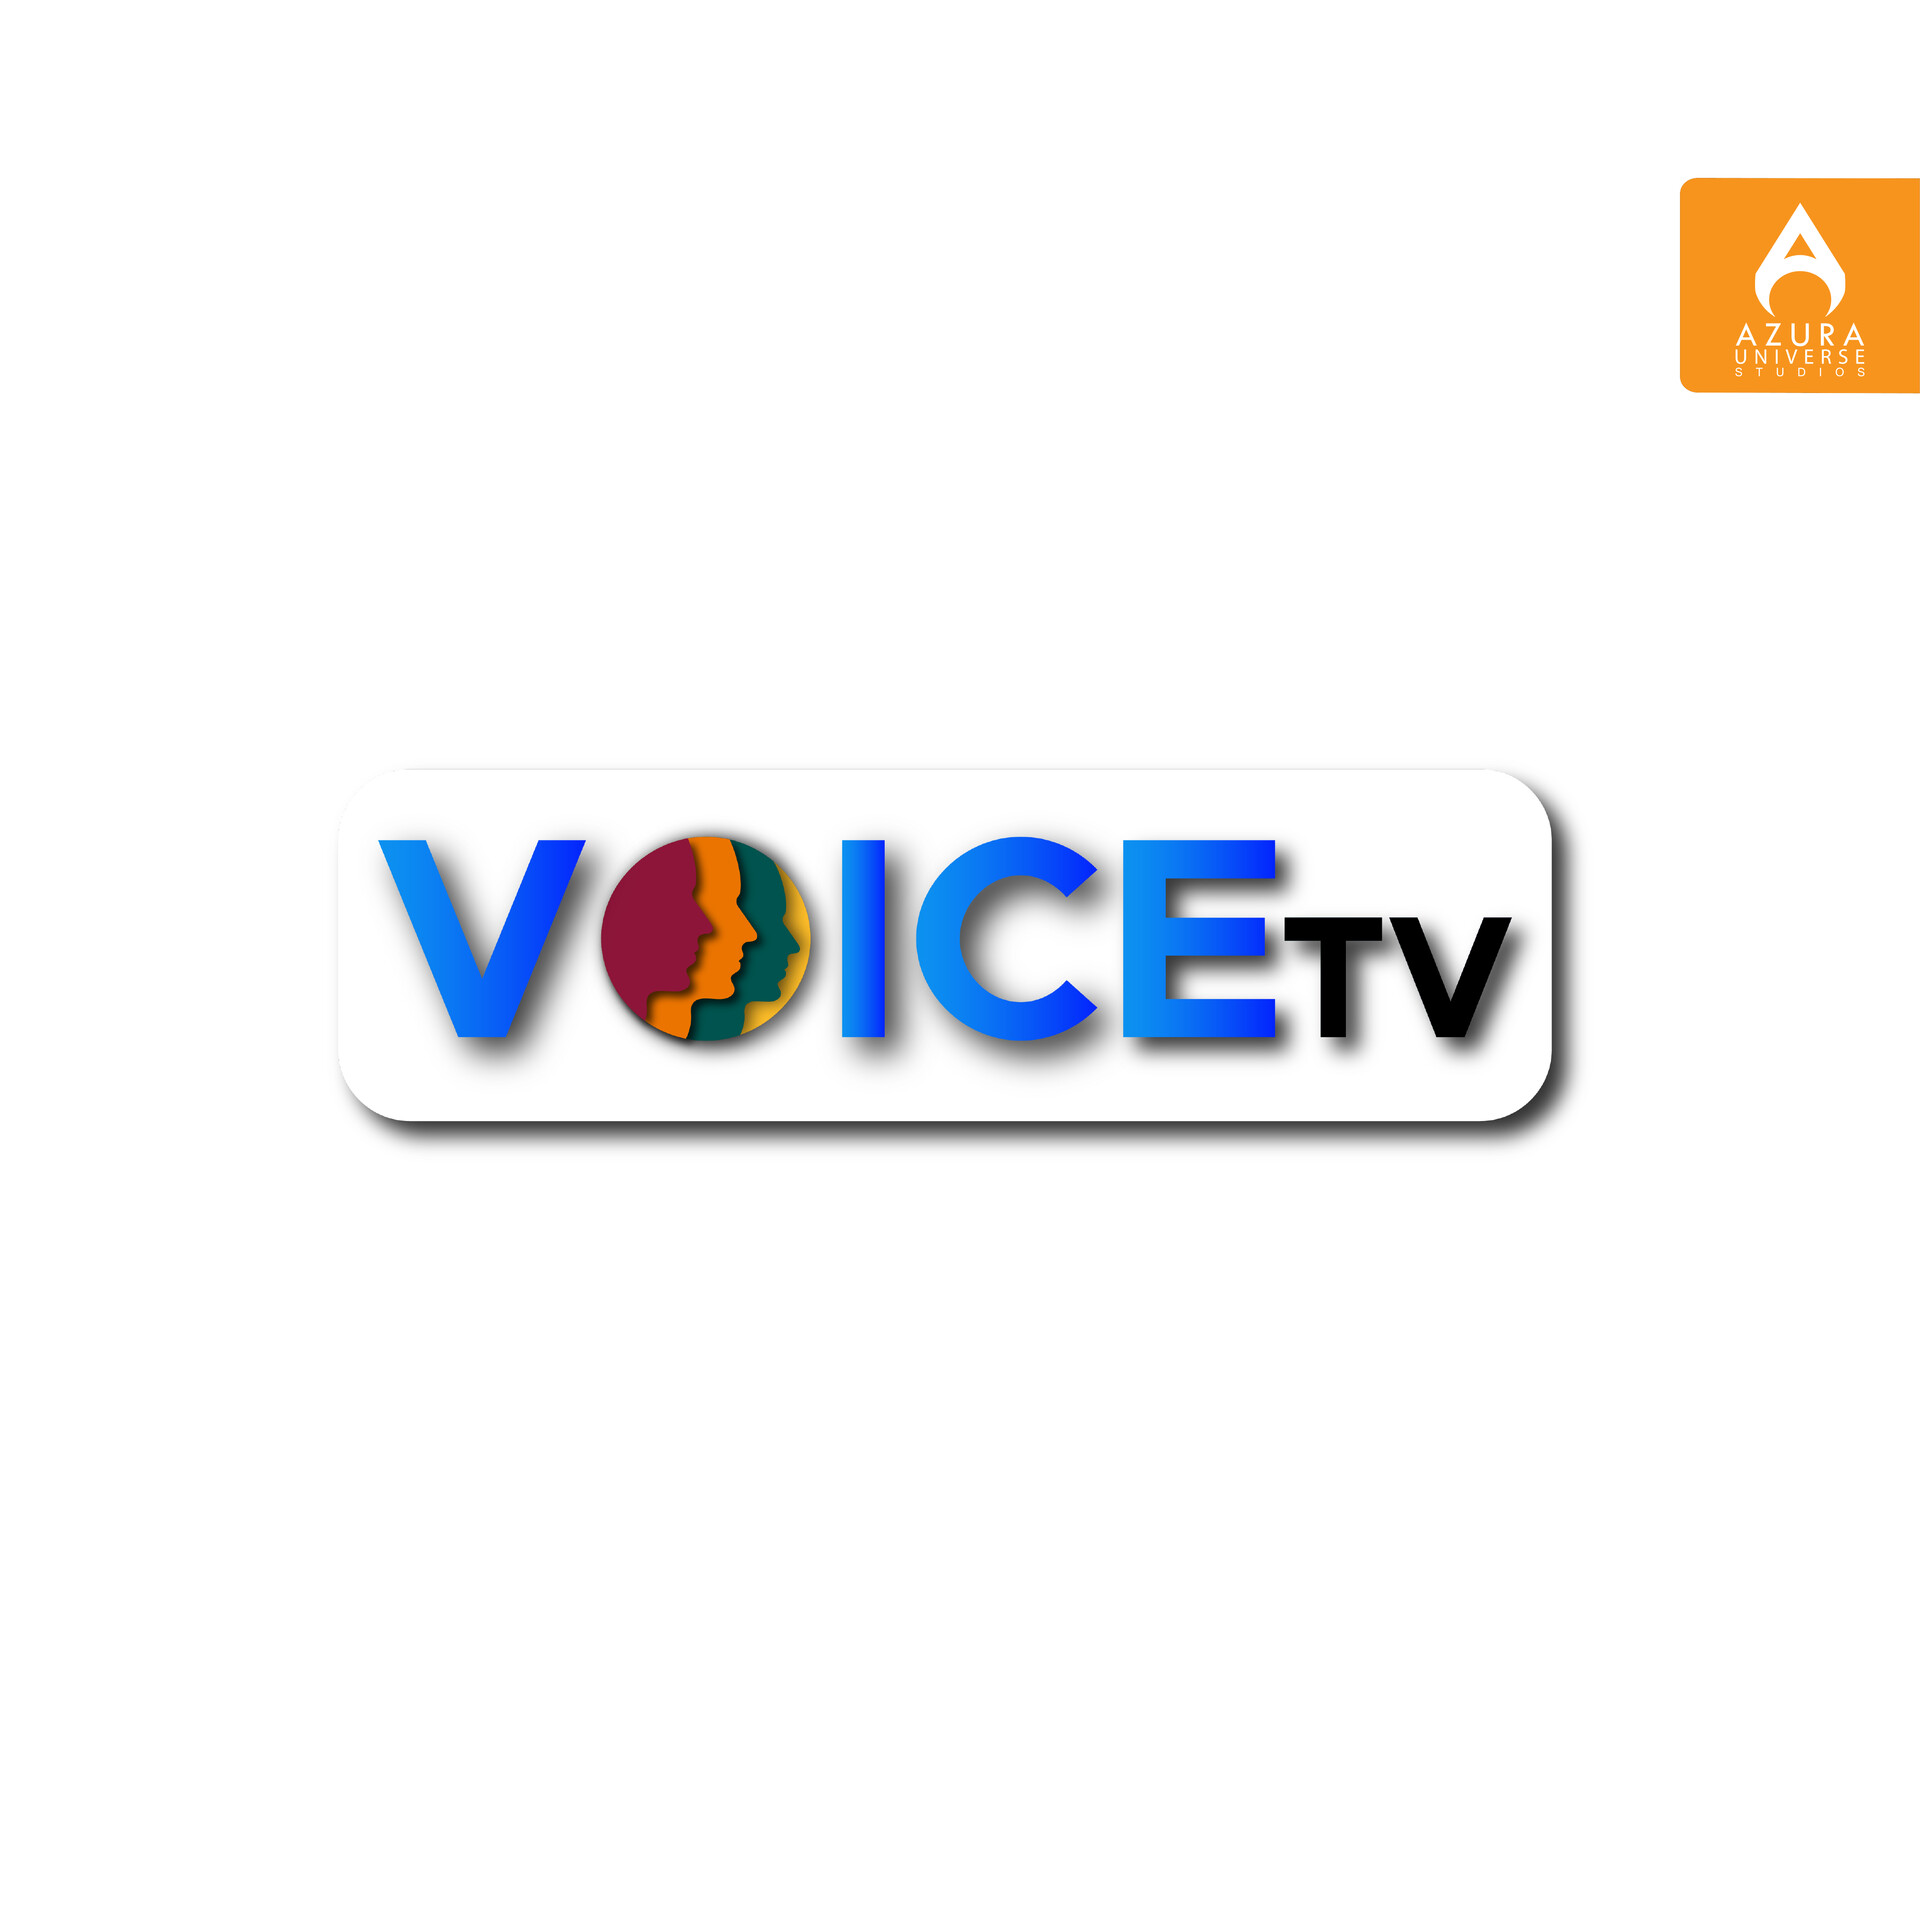 TalkTV reveals onair branding  NewscastStudio